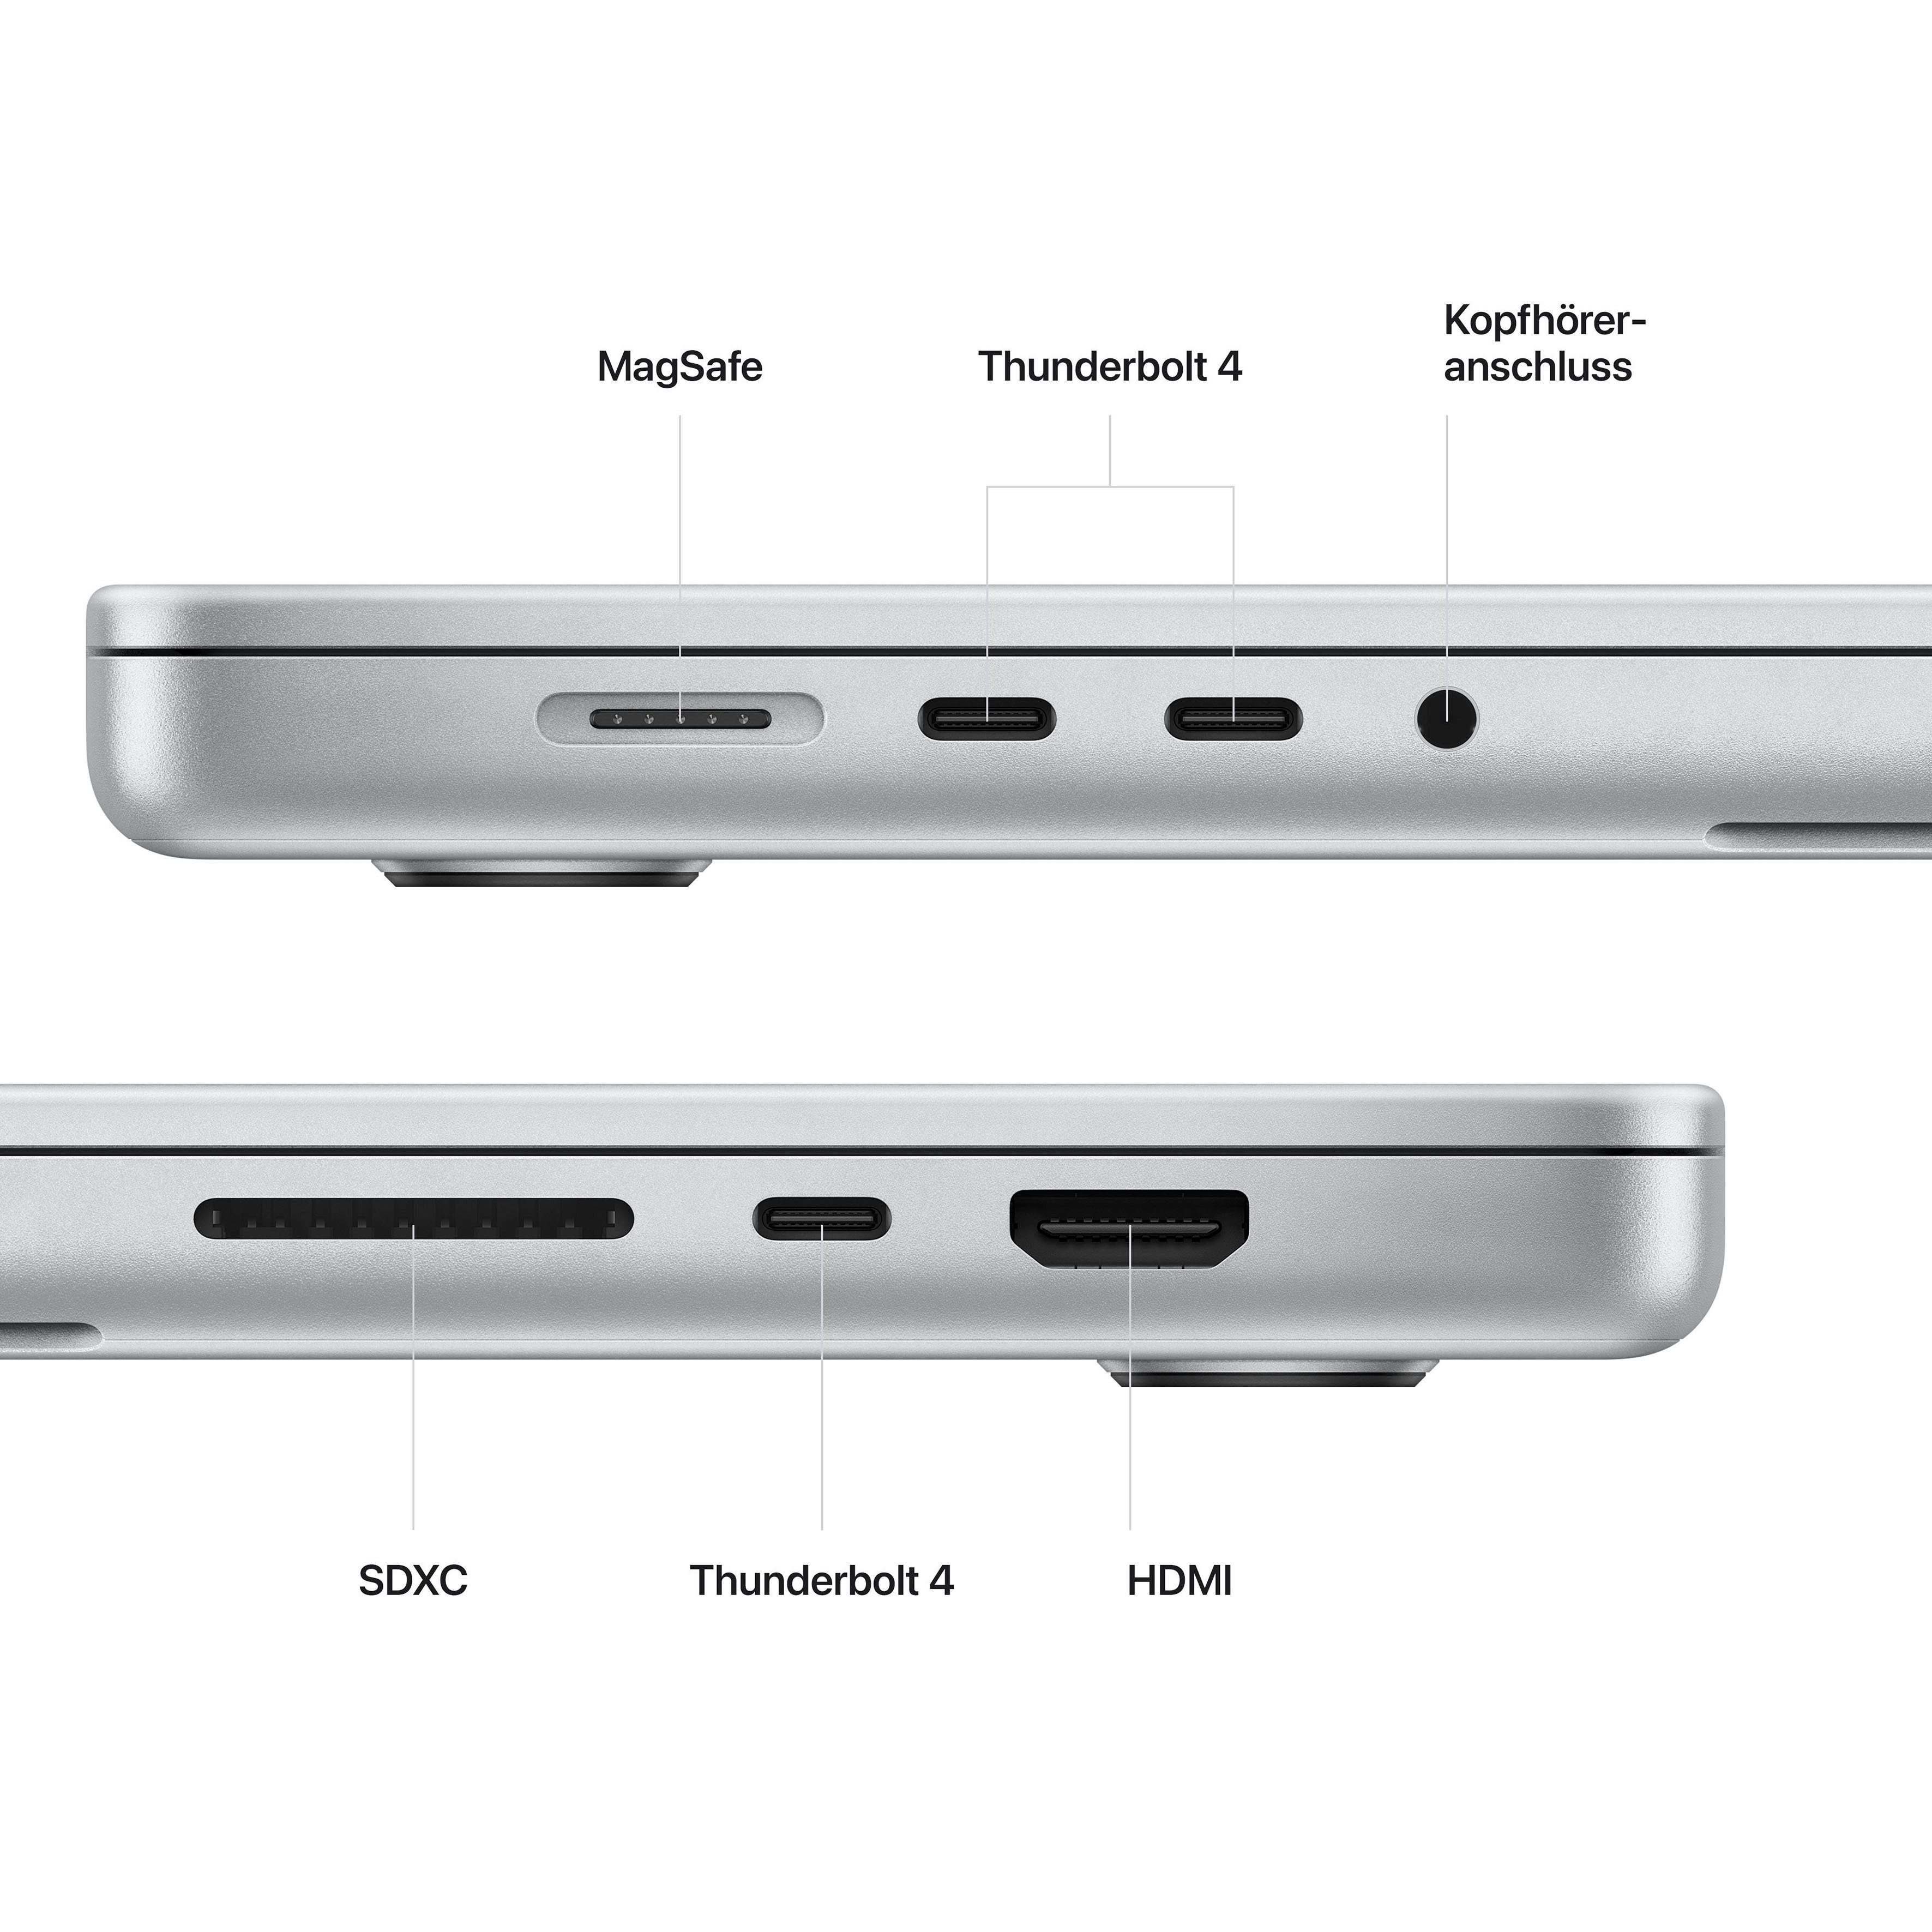 GB Pro 512 M2, Apple SSD) Notebook (41,05 Zoll, silver cm/16 M2, MacBook Apple